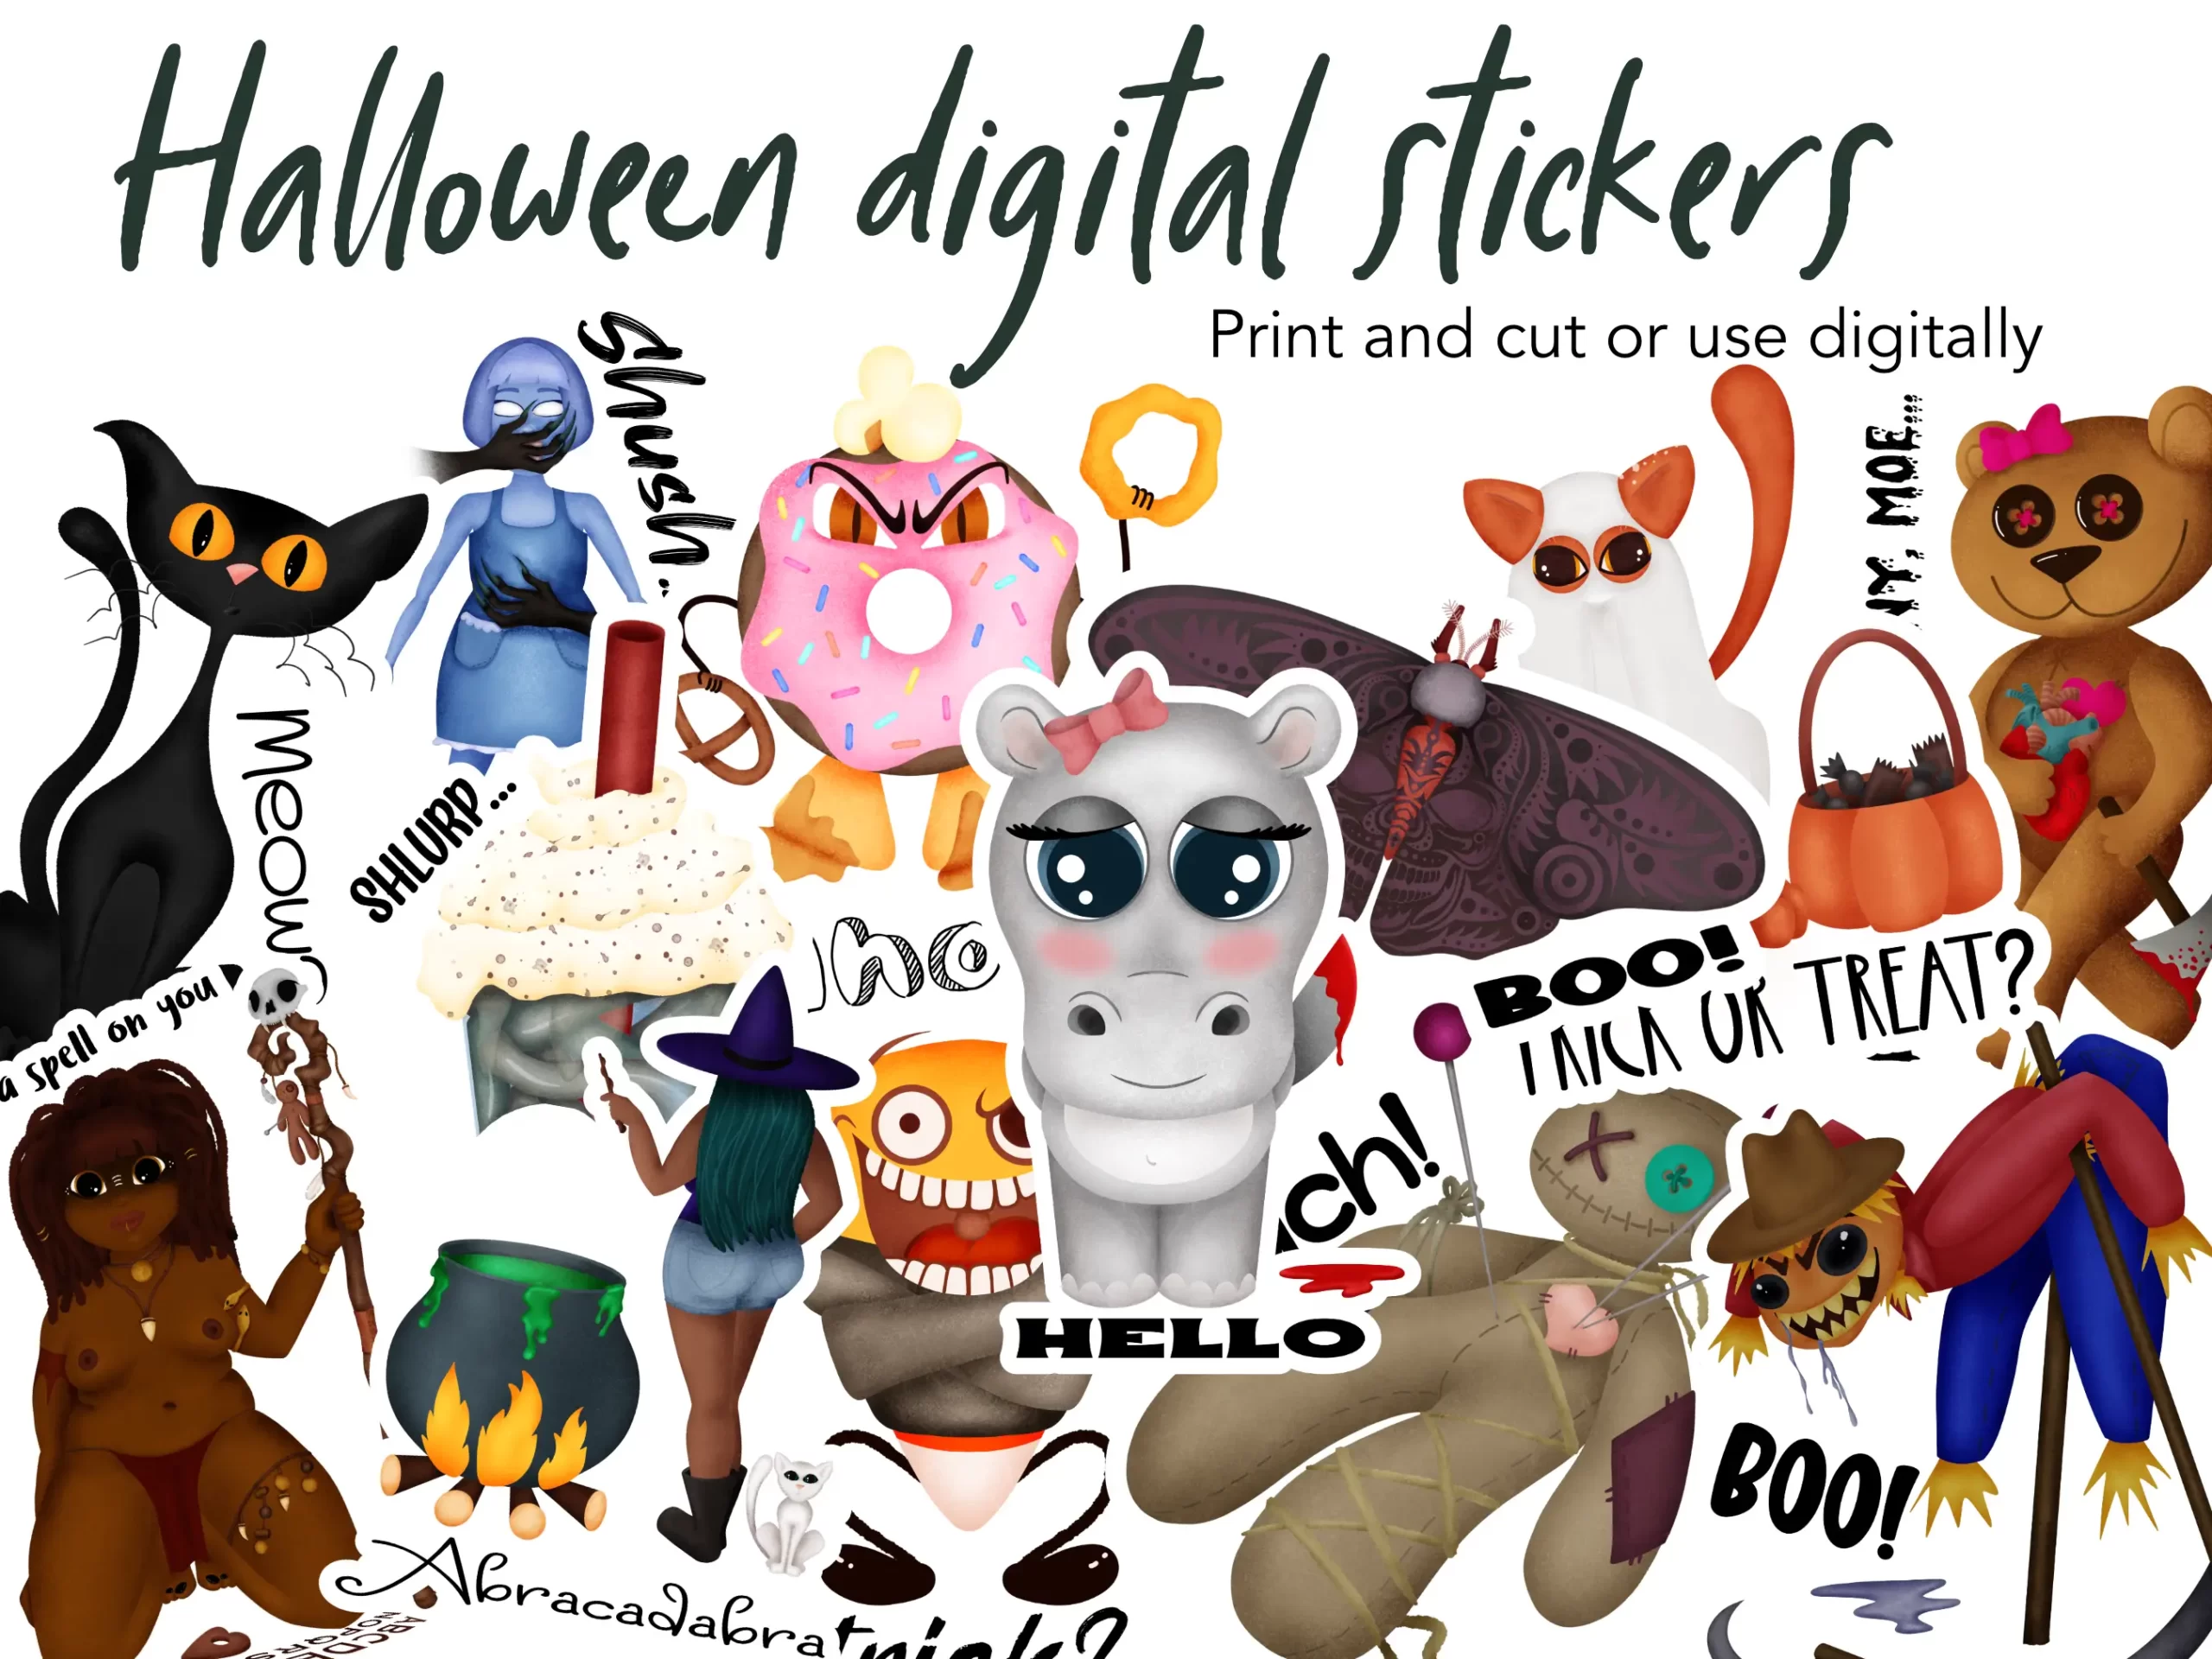 blackmuffindigital free halloween stickers scaled